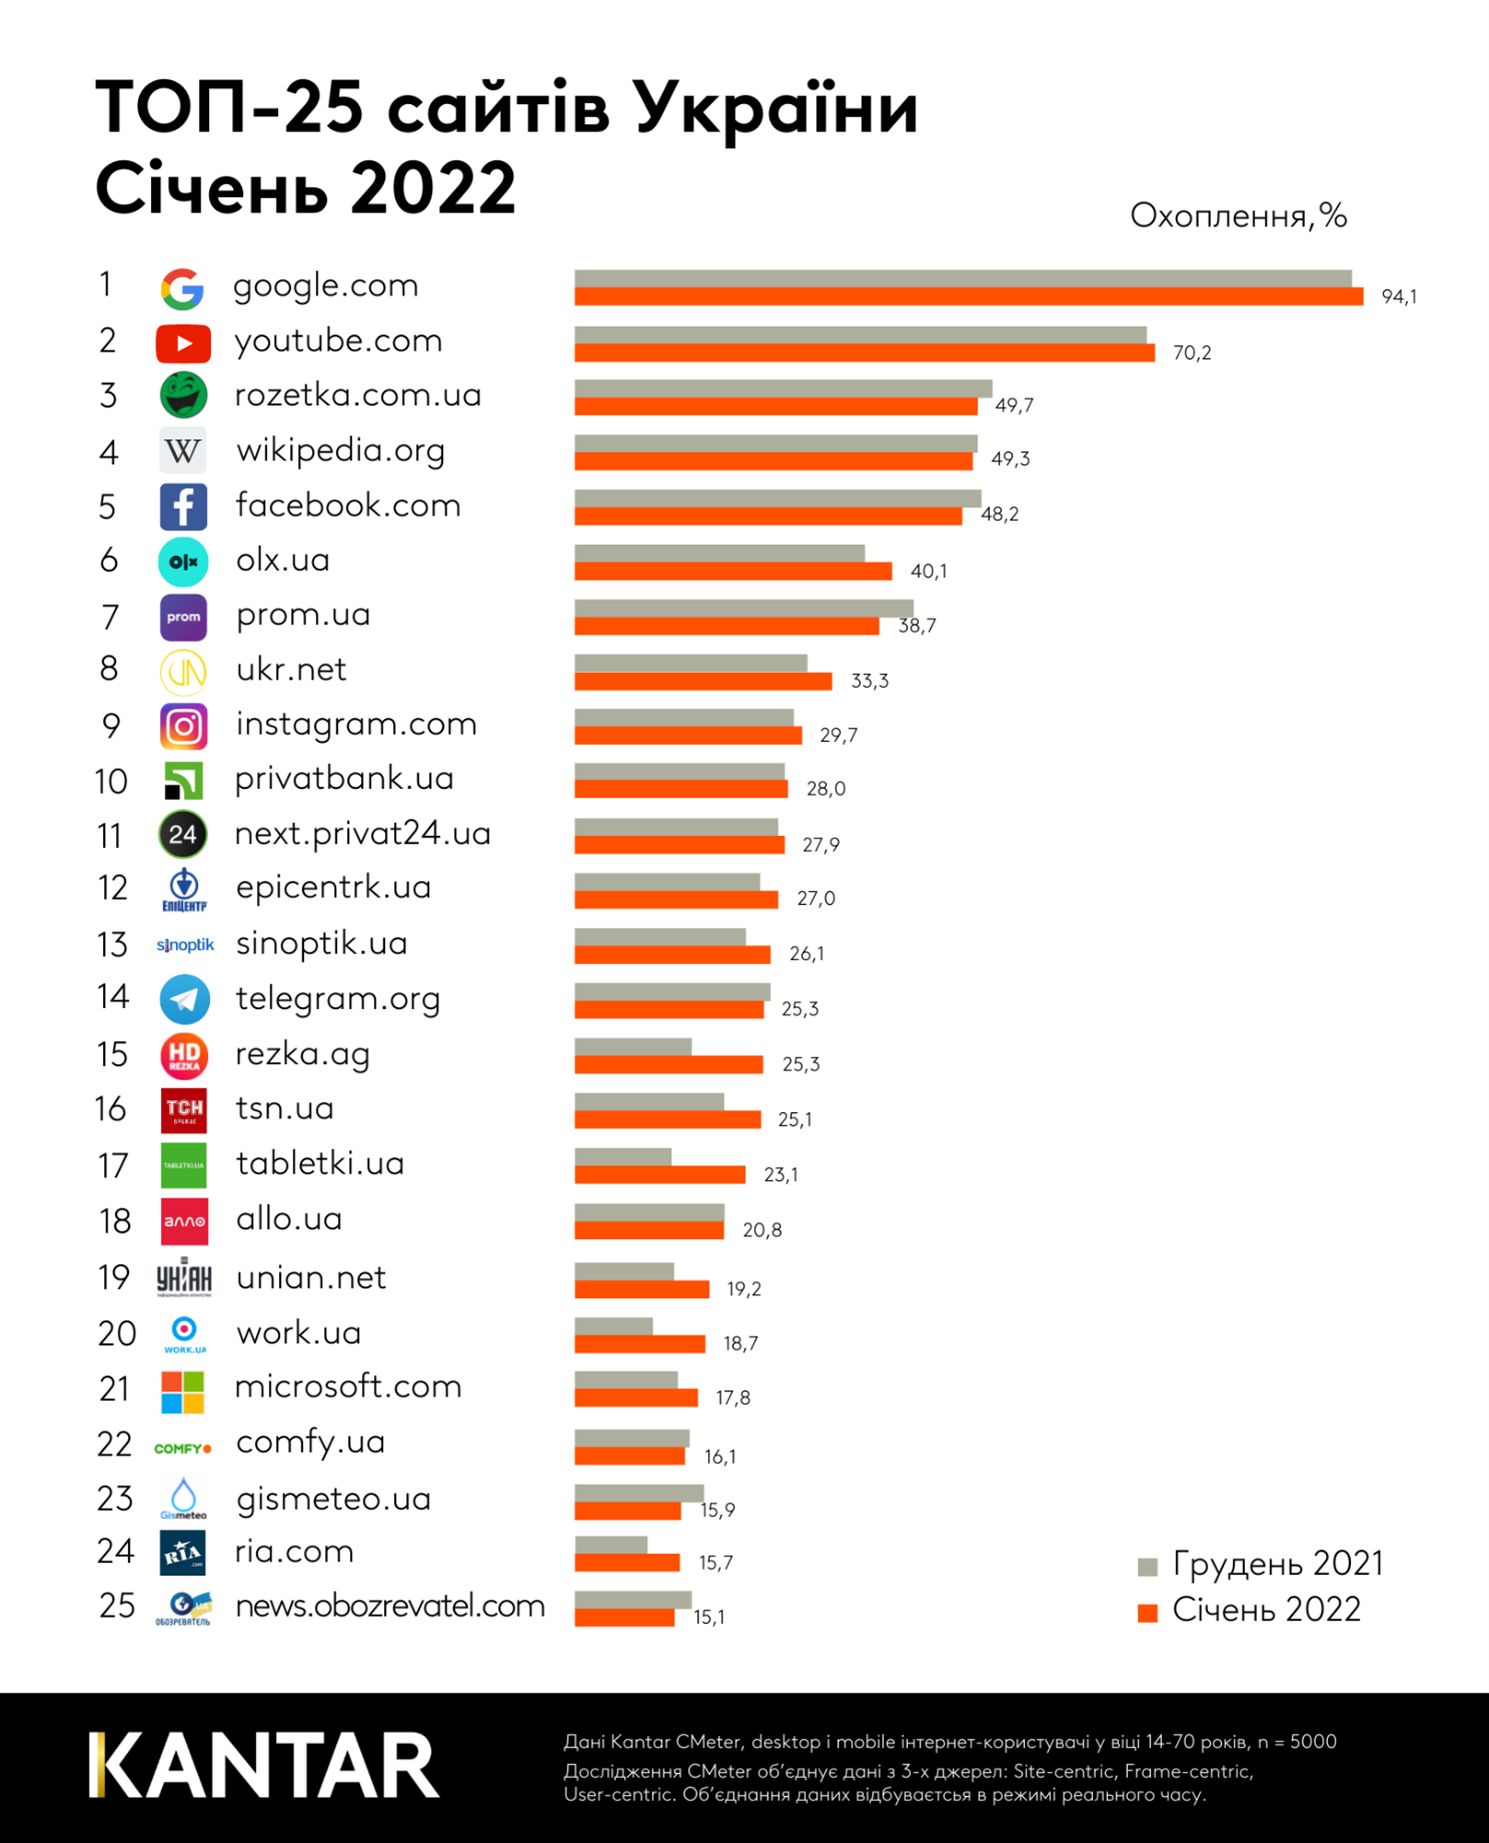 The most popular sites January 2022 Kantar Ukraine